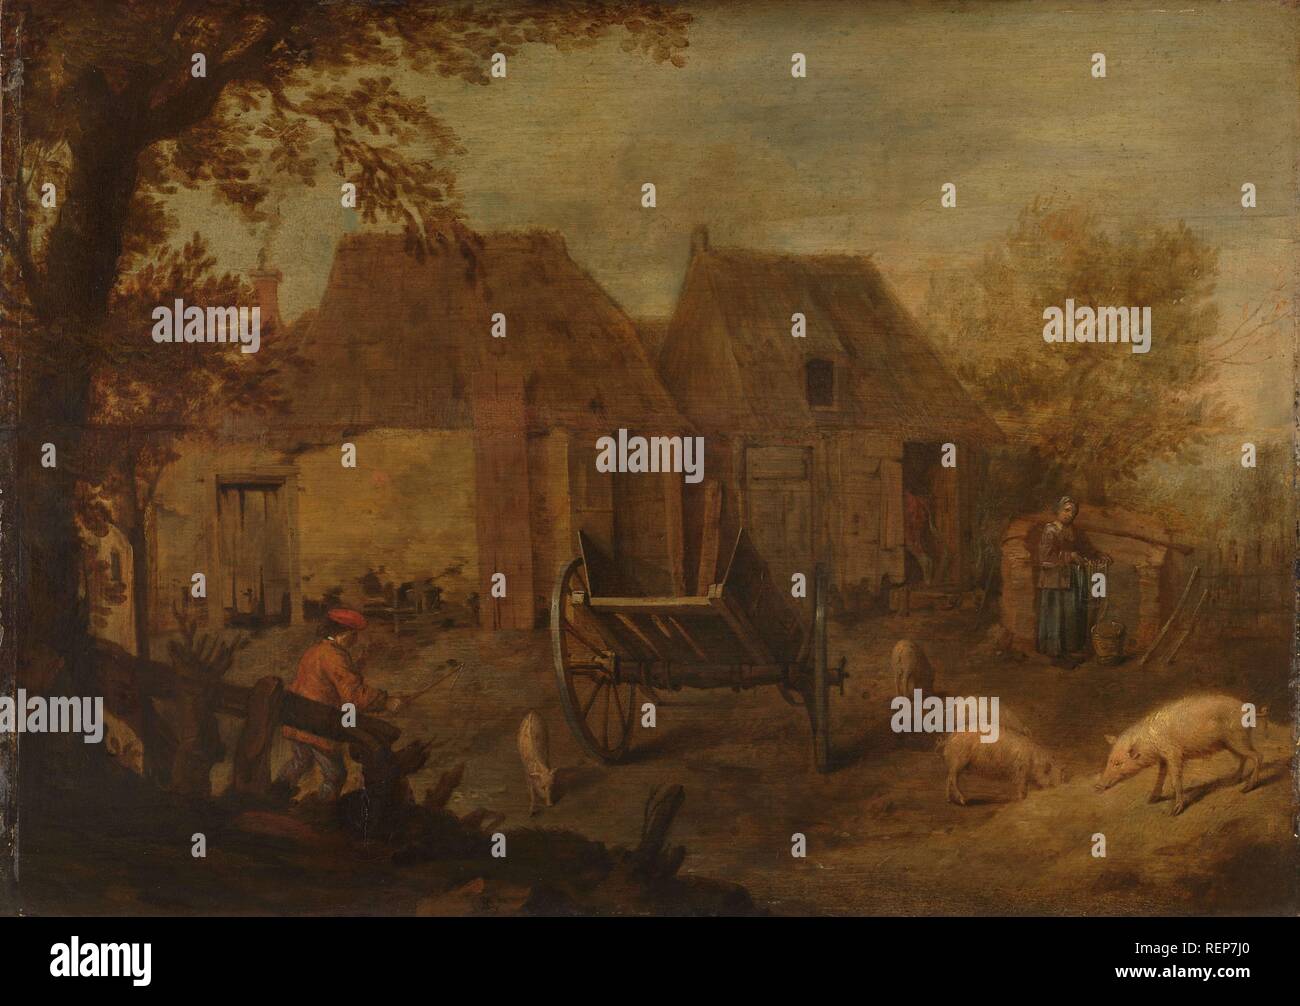 Barnyard. Dating: c. 1640. Place: Southern Netherlands. Measurements: h 32 cm × w 45.5 cm × h 50 cm × w 63 cm × t 8 cm. Museum: Rijksmuseum, Amsterdam. Stock Photo